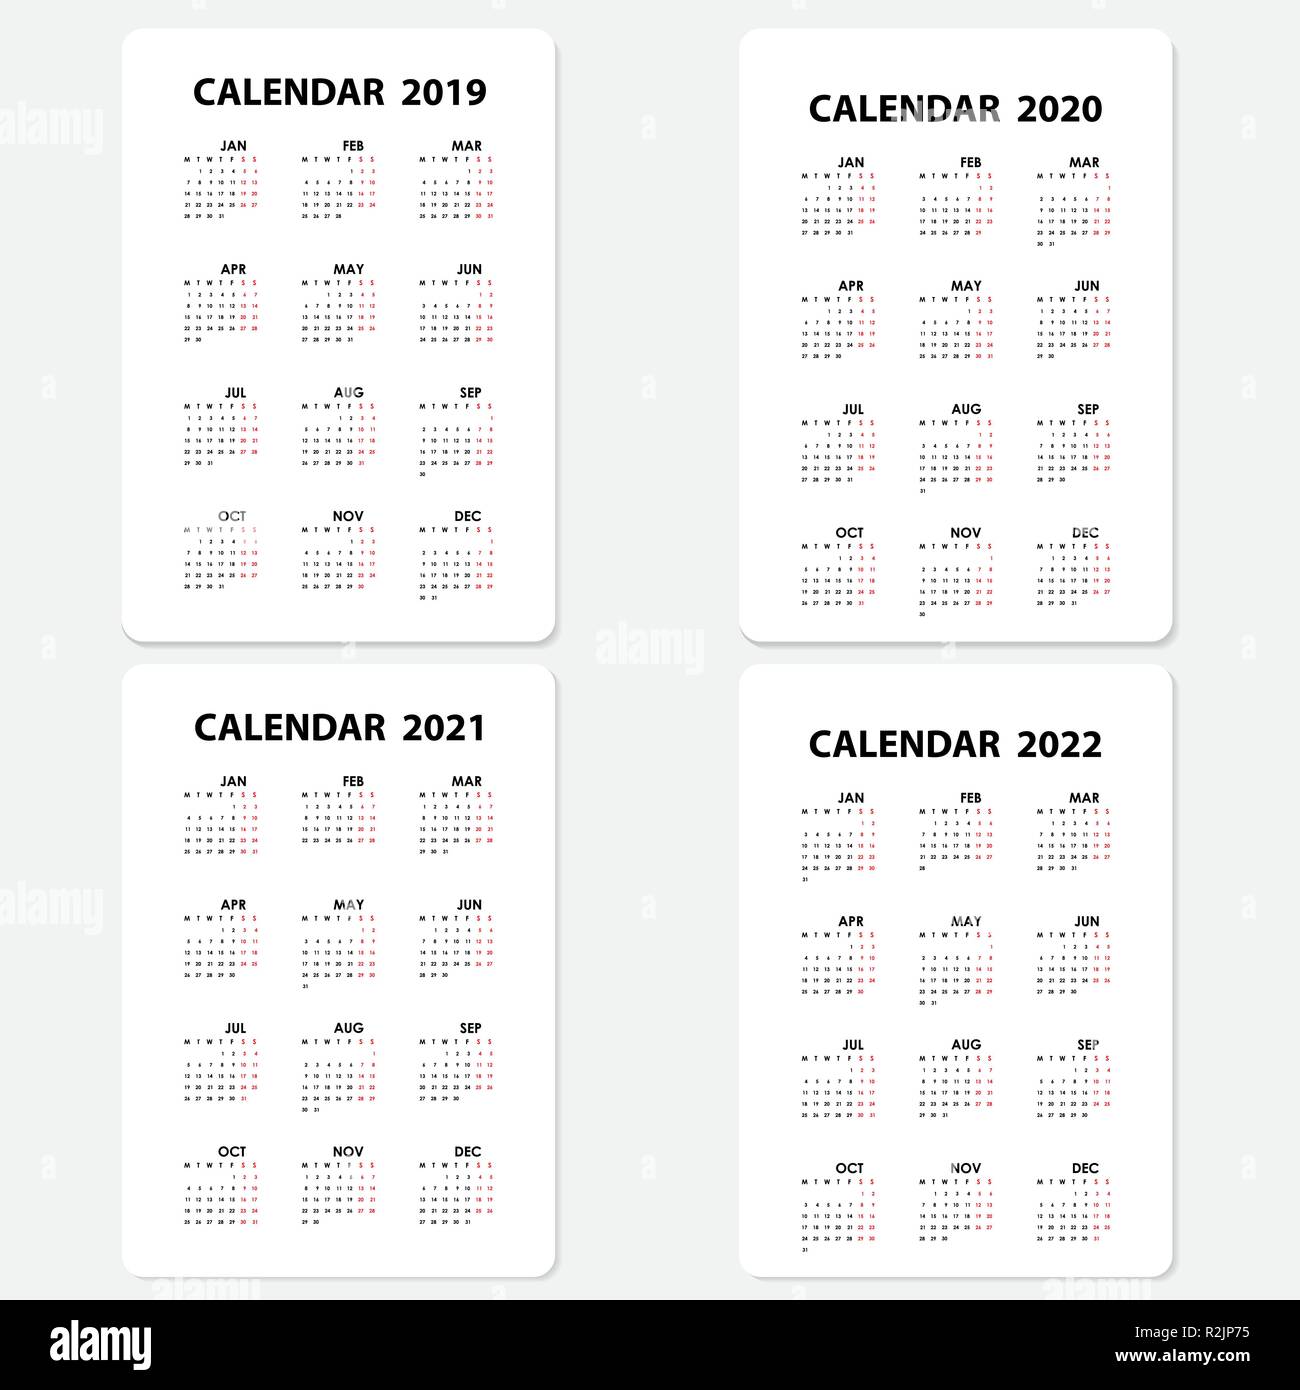 Calendar 2019 Calendar 2020 Calendar 2021 And 2022 Template